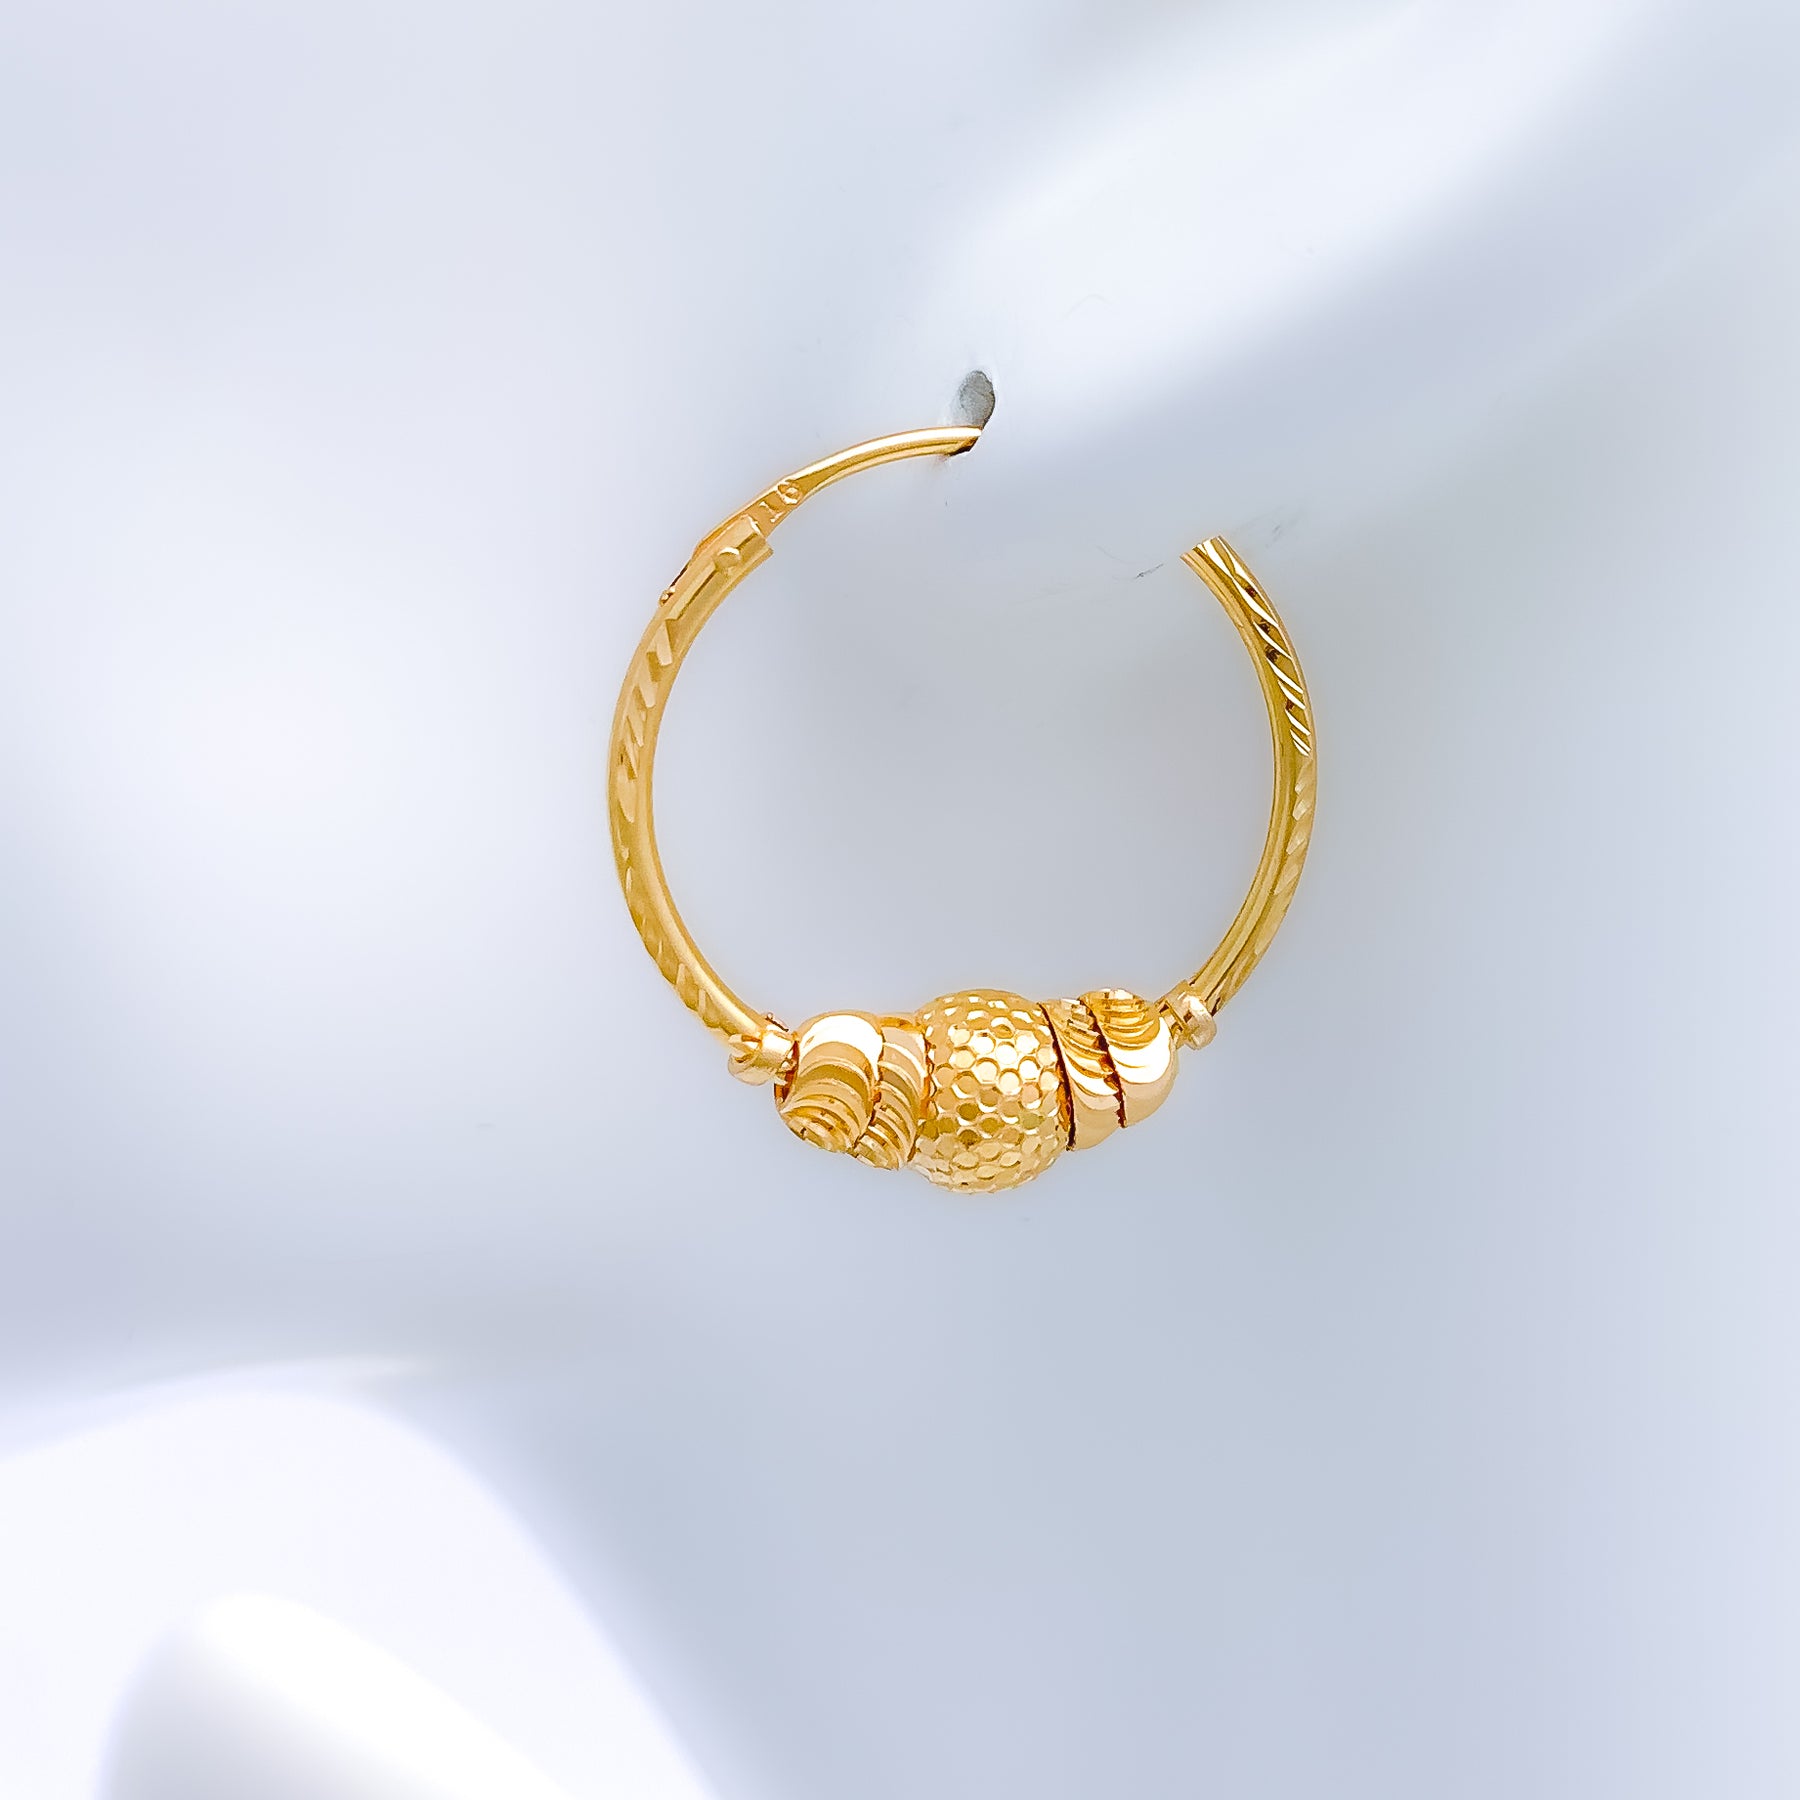 New light weight gold earrings designs - Simple Craft Idea